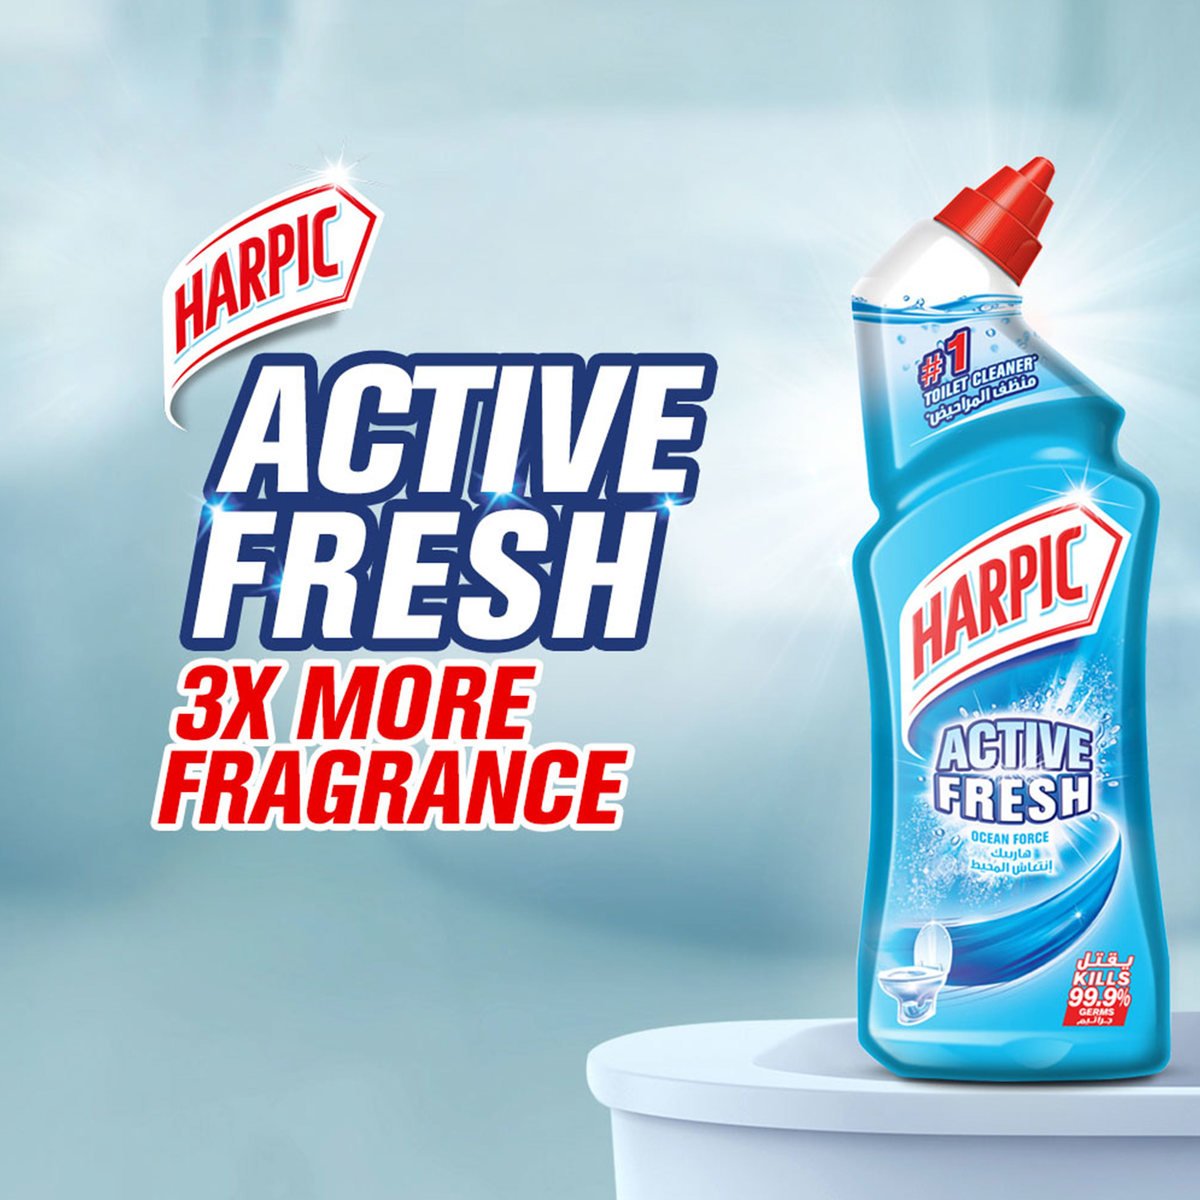 Harpic Active Fresh Ocean Force Toilet Cleaner 750ml x 3pcs